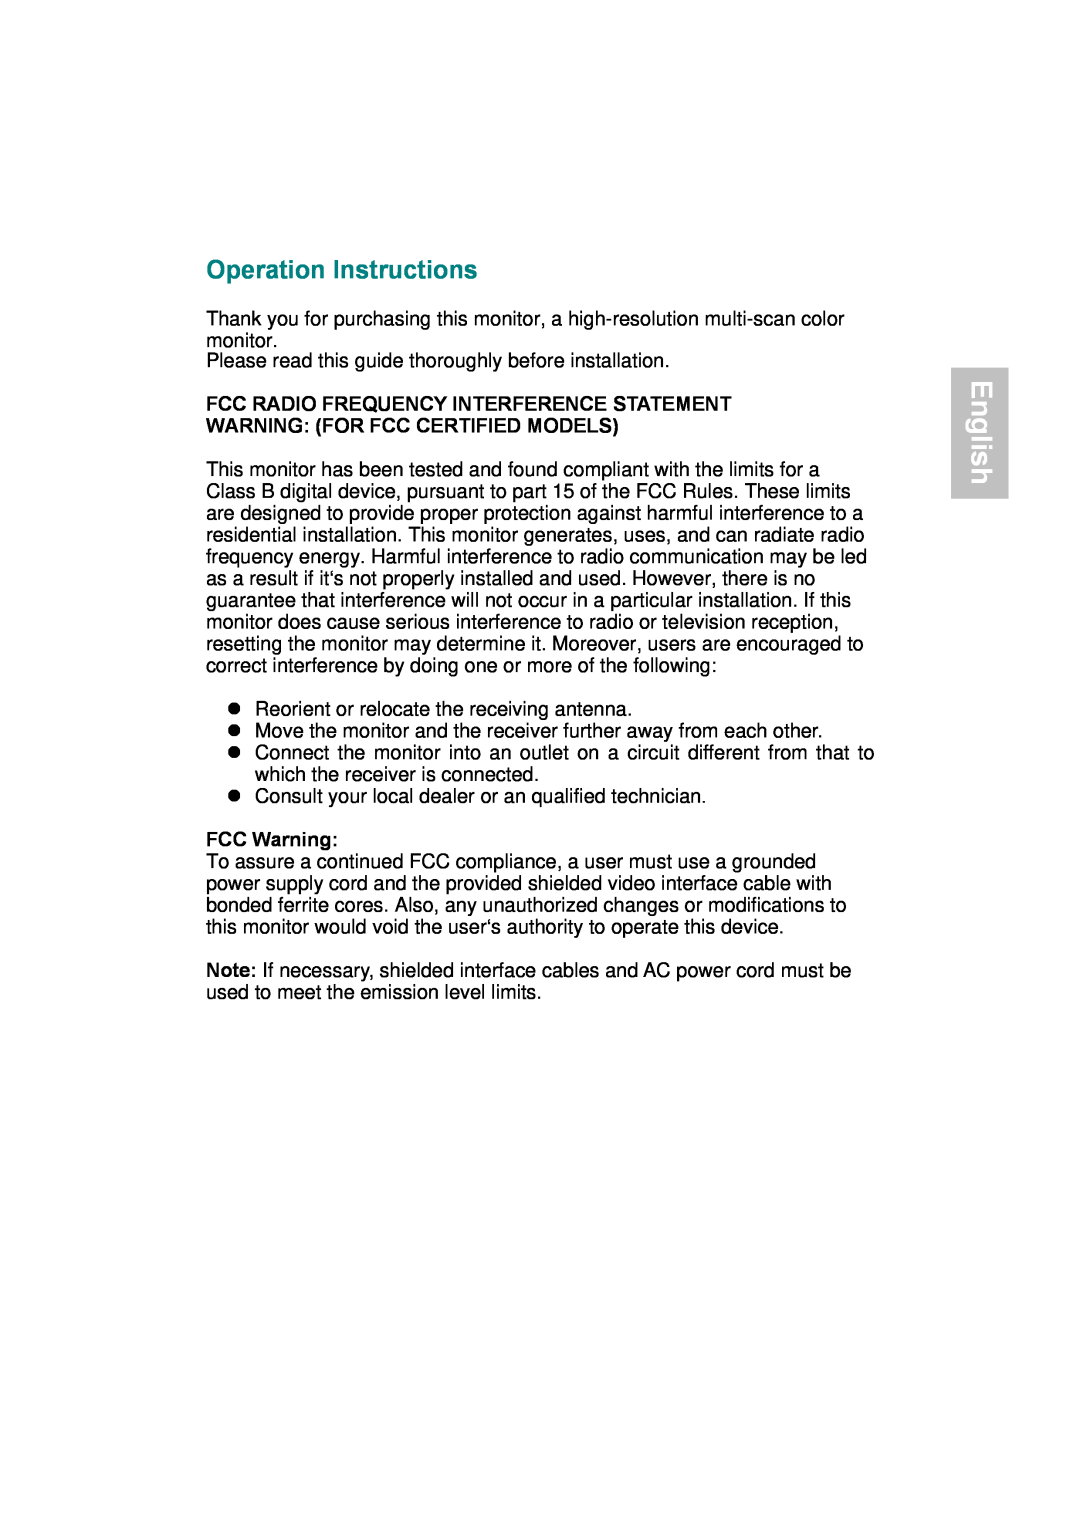 AOC 177Sa-1 manual English, Operation Instructions, FCC Warning 